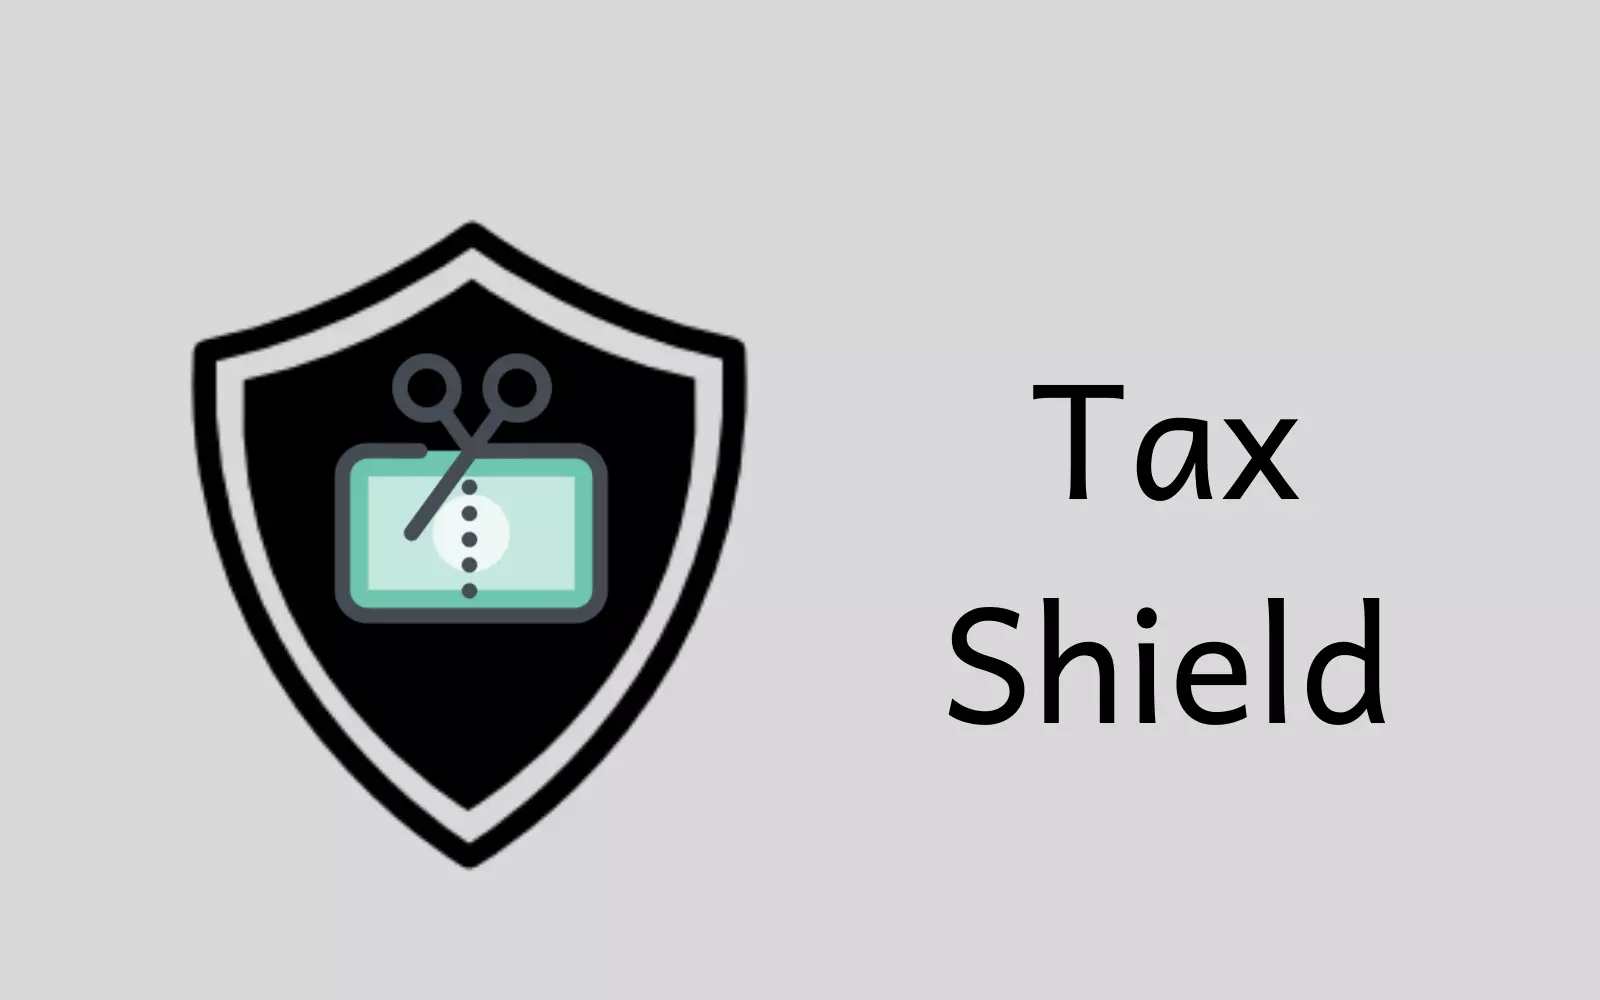 Tax Shield Approach